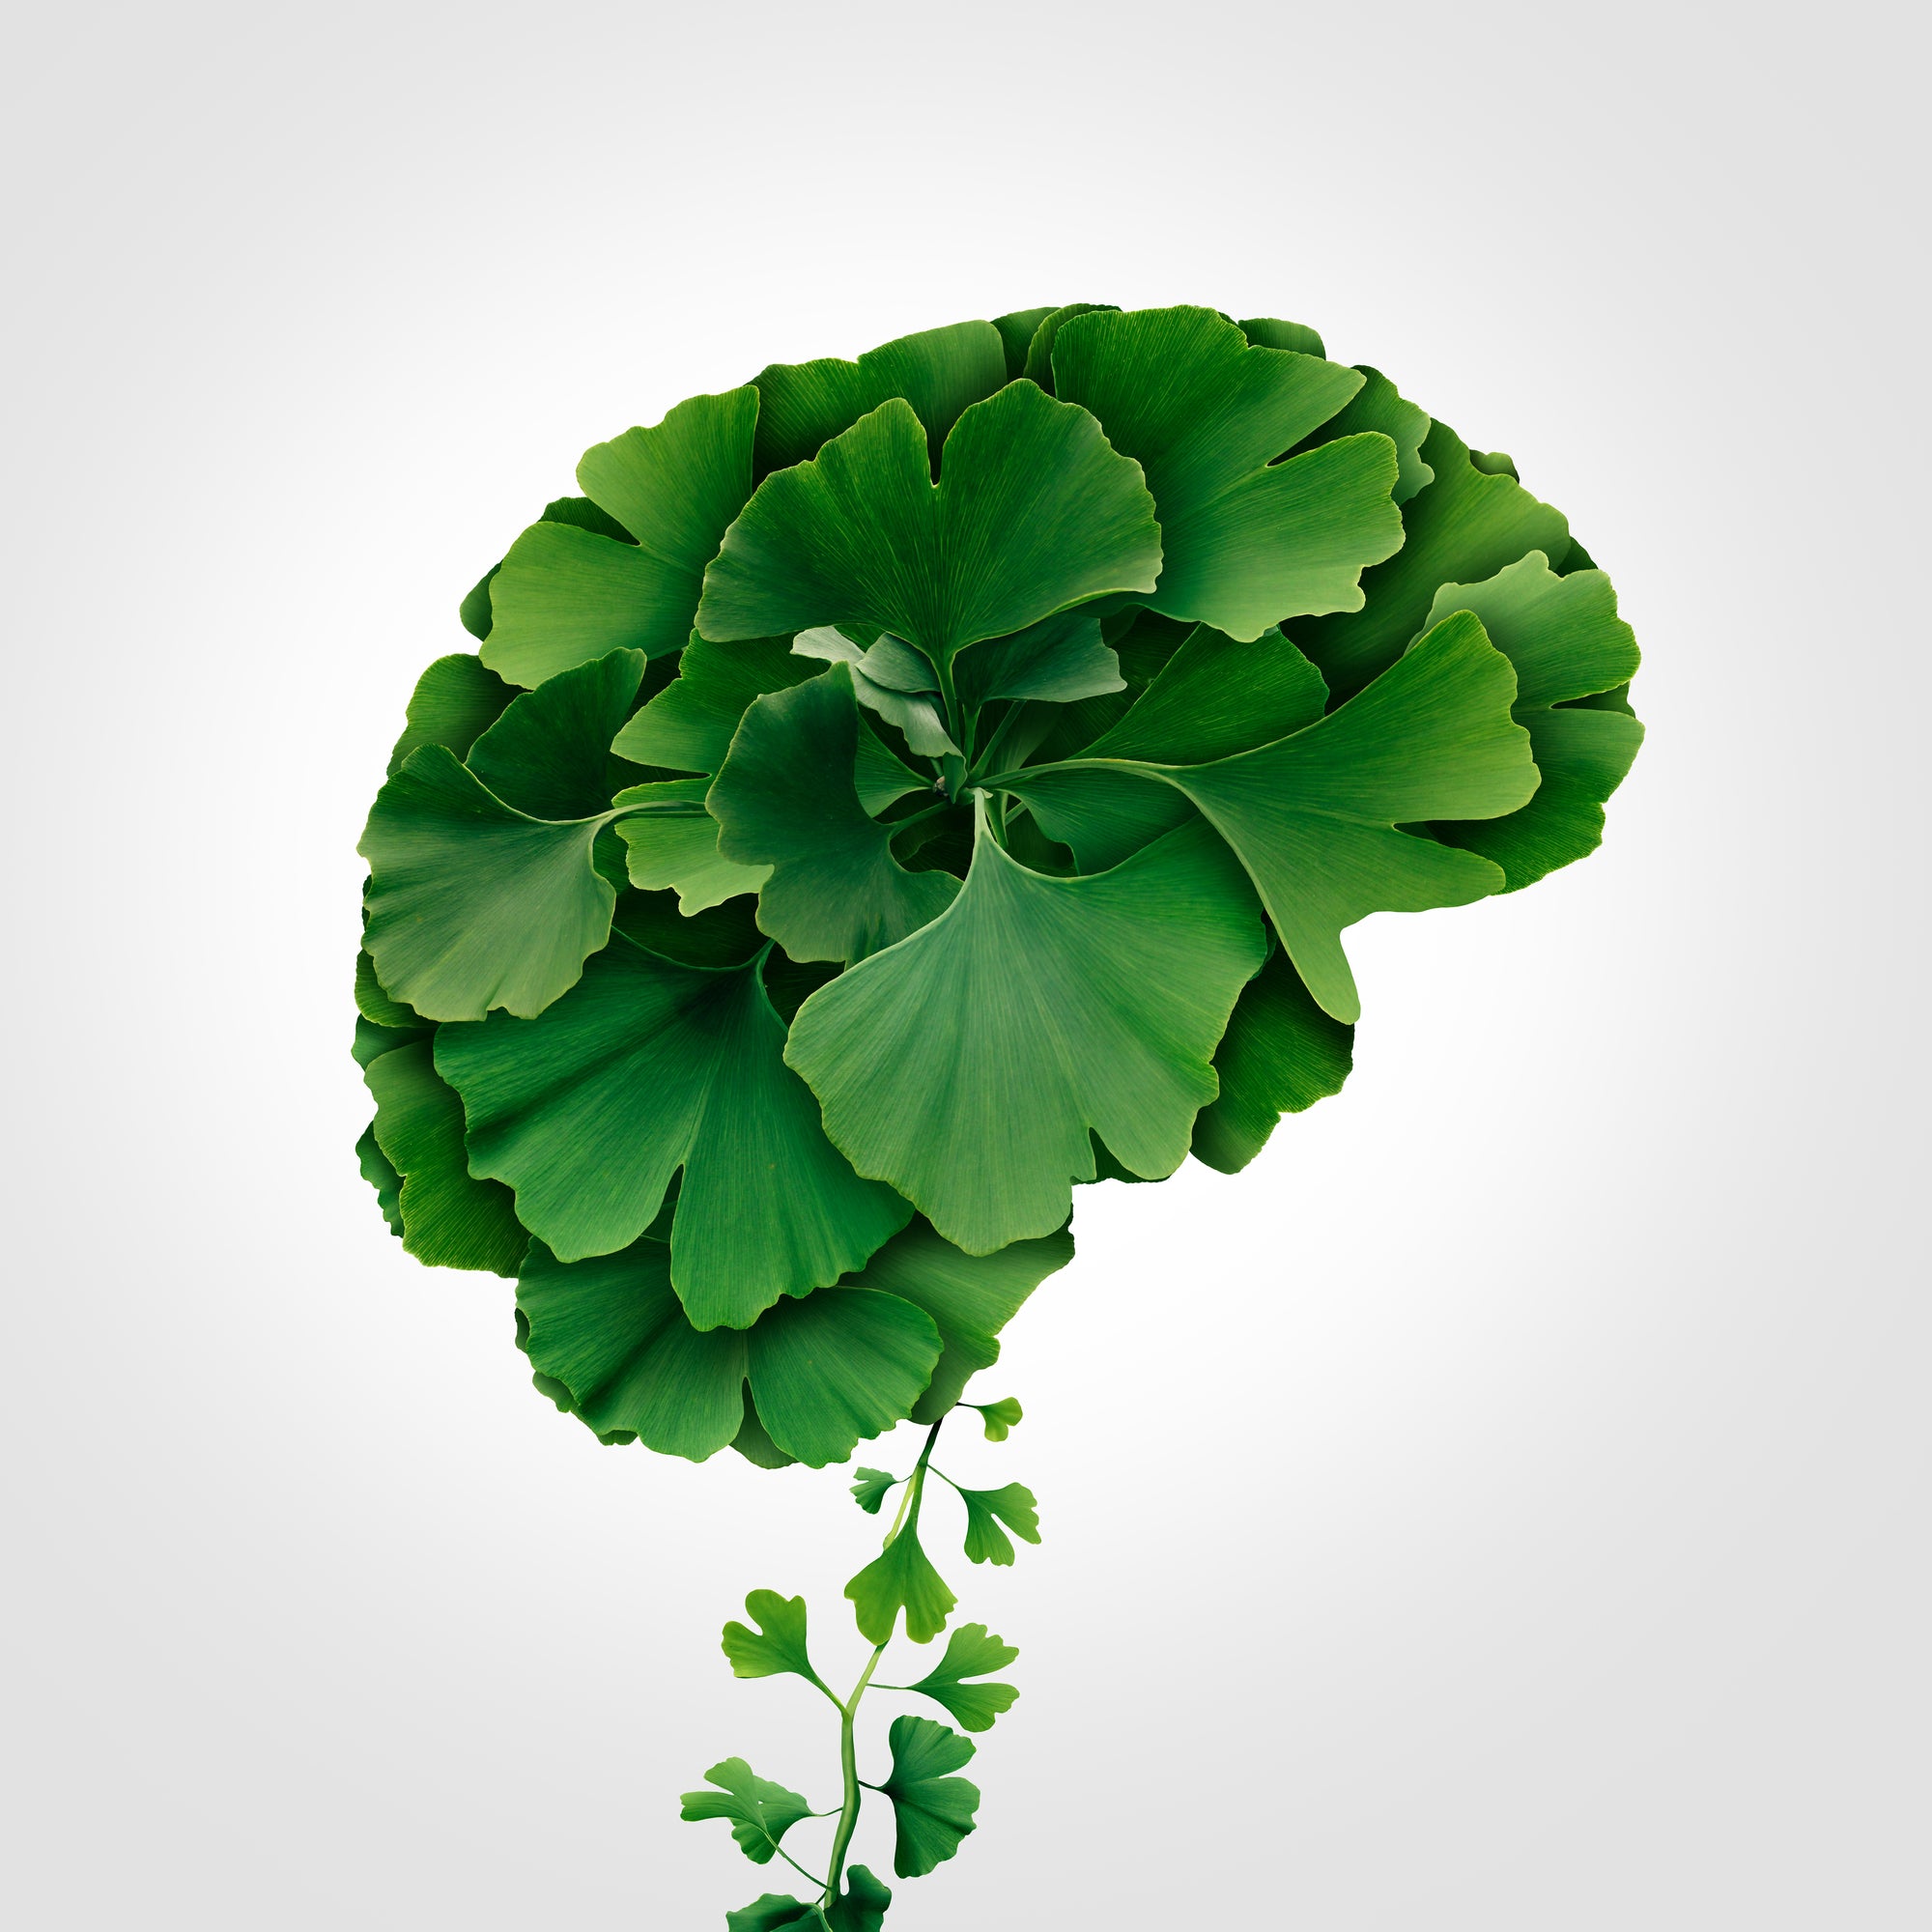 Ginkgo biloba leaves forming a brain shape